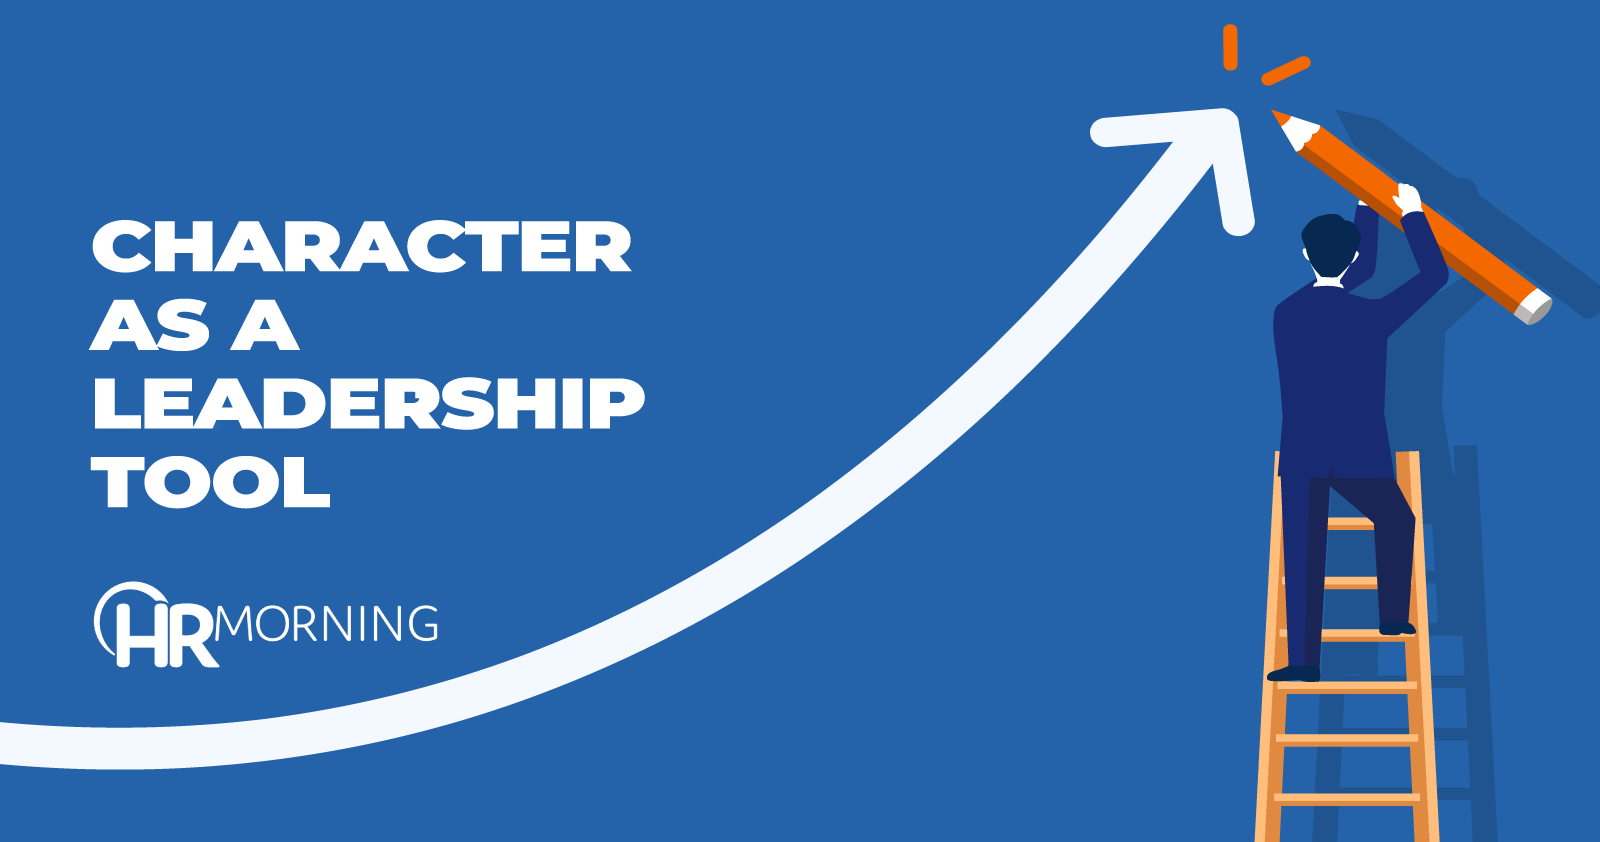 Character as a leadership tool